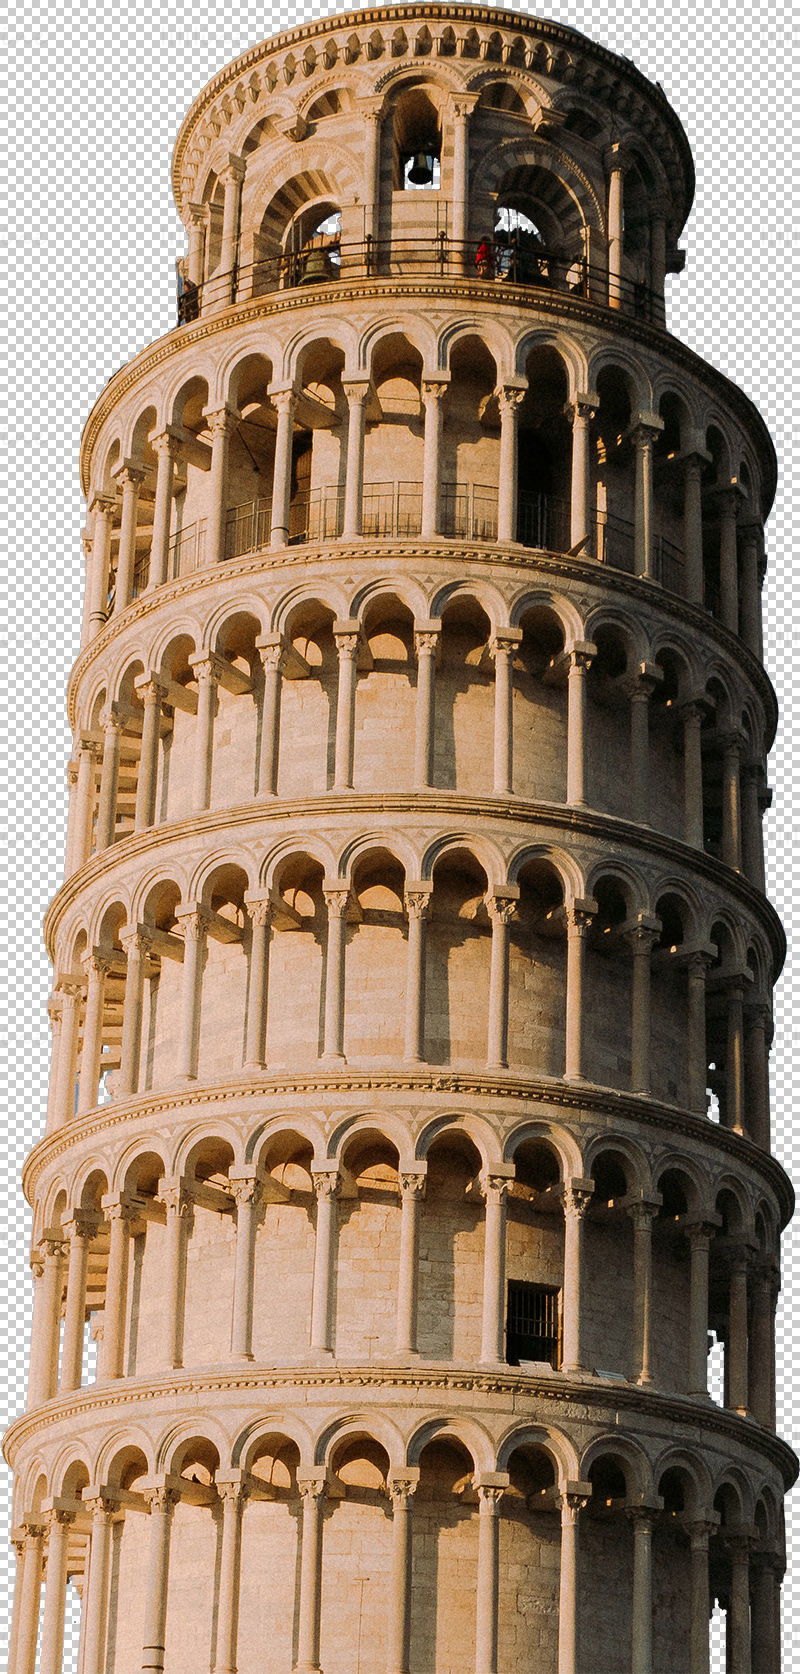 Pisa tower transparent png